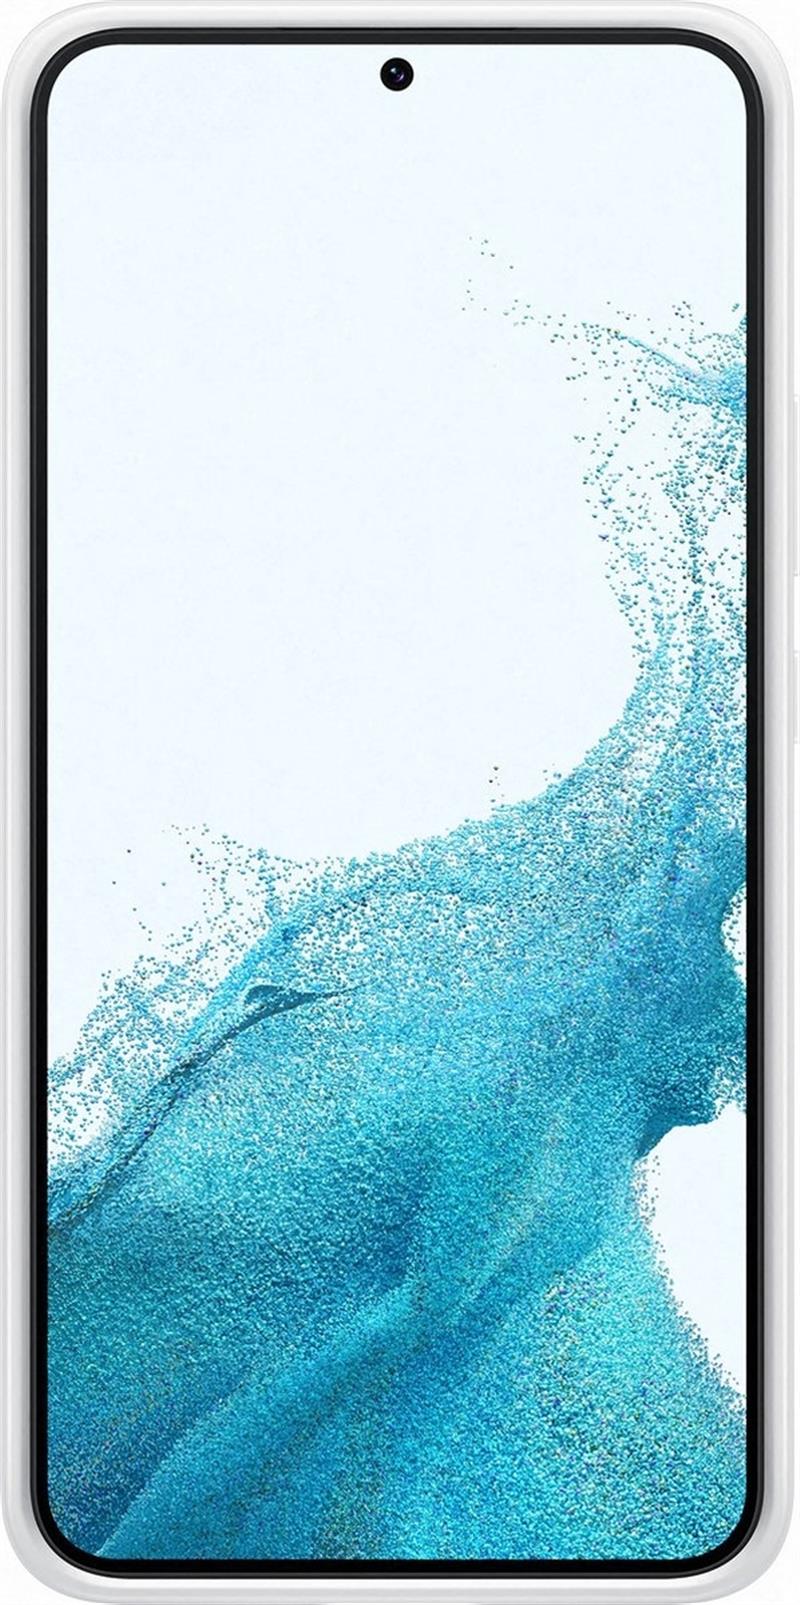  Samsung Frame Cover Galaxy S22 5G White